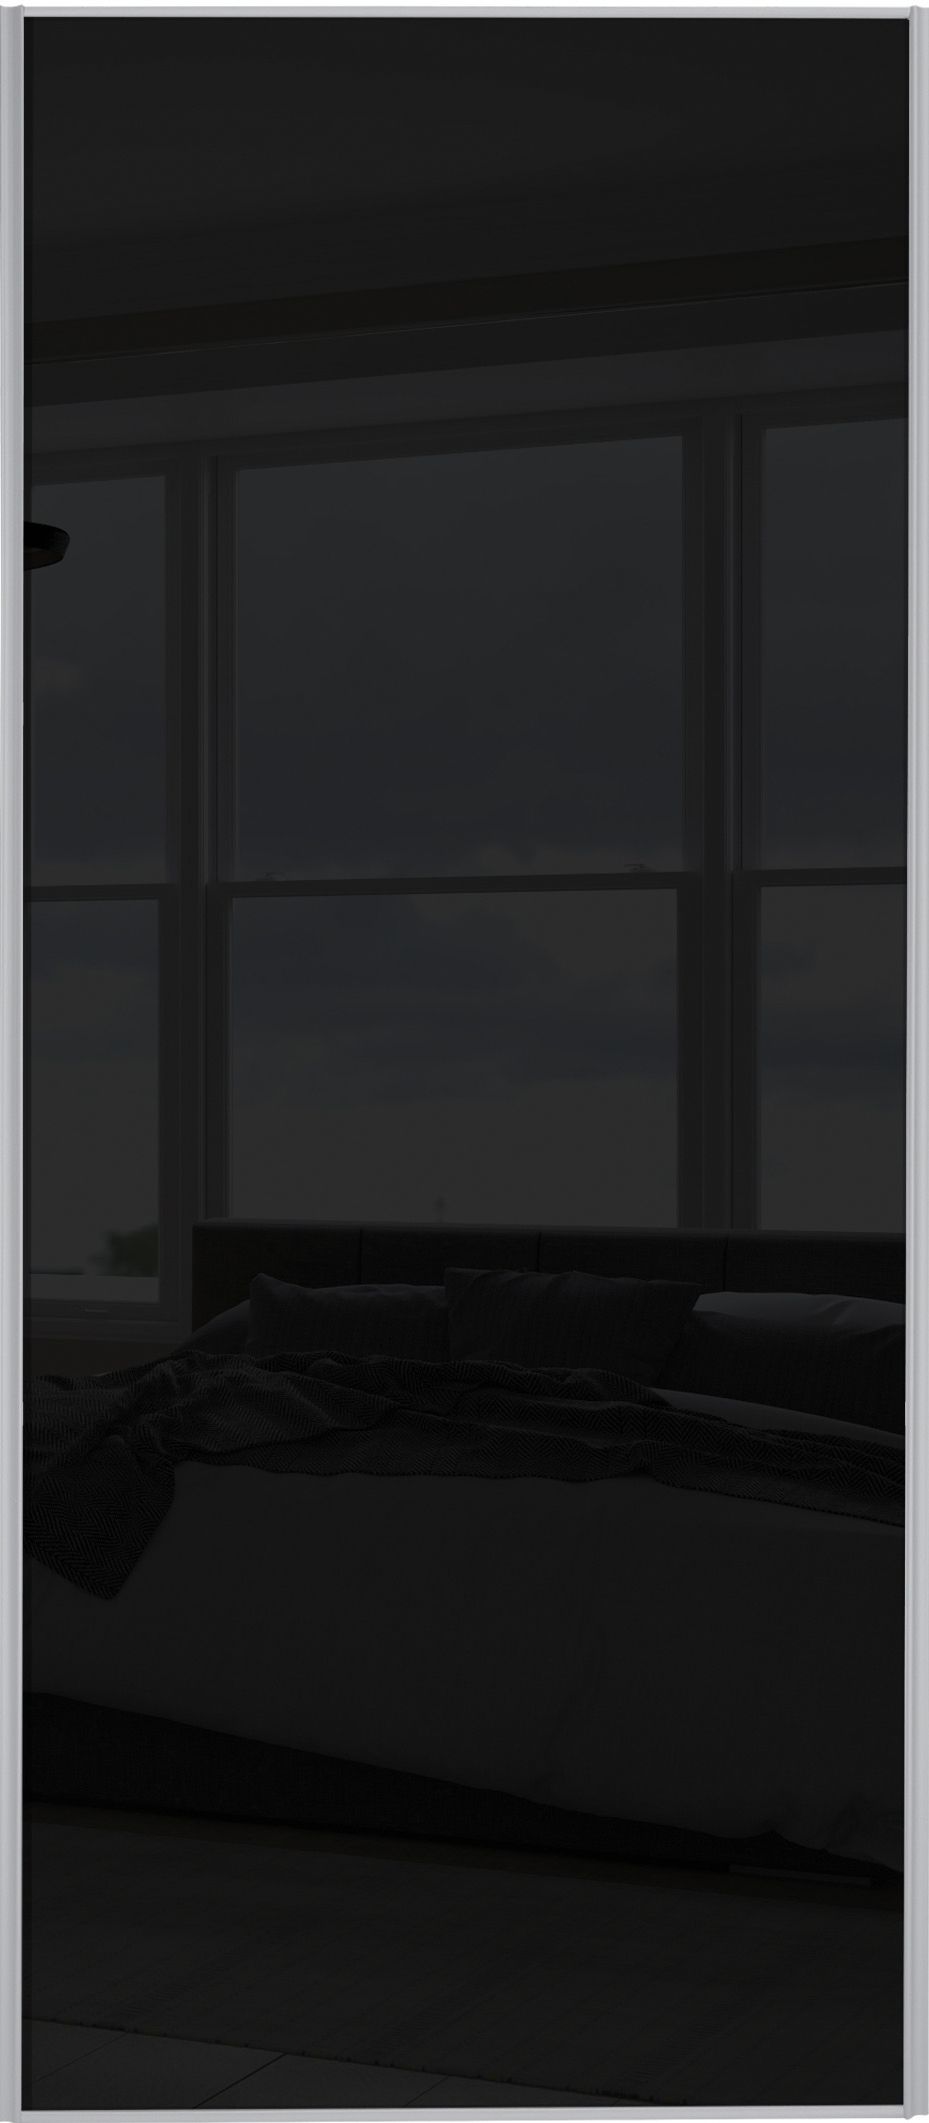 Image of Spacepro Sliding Wardrobe Door Silver Framed Single Panel Black Glass - 2220 x 914mm